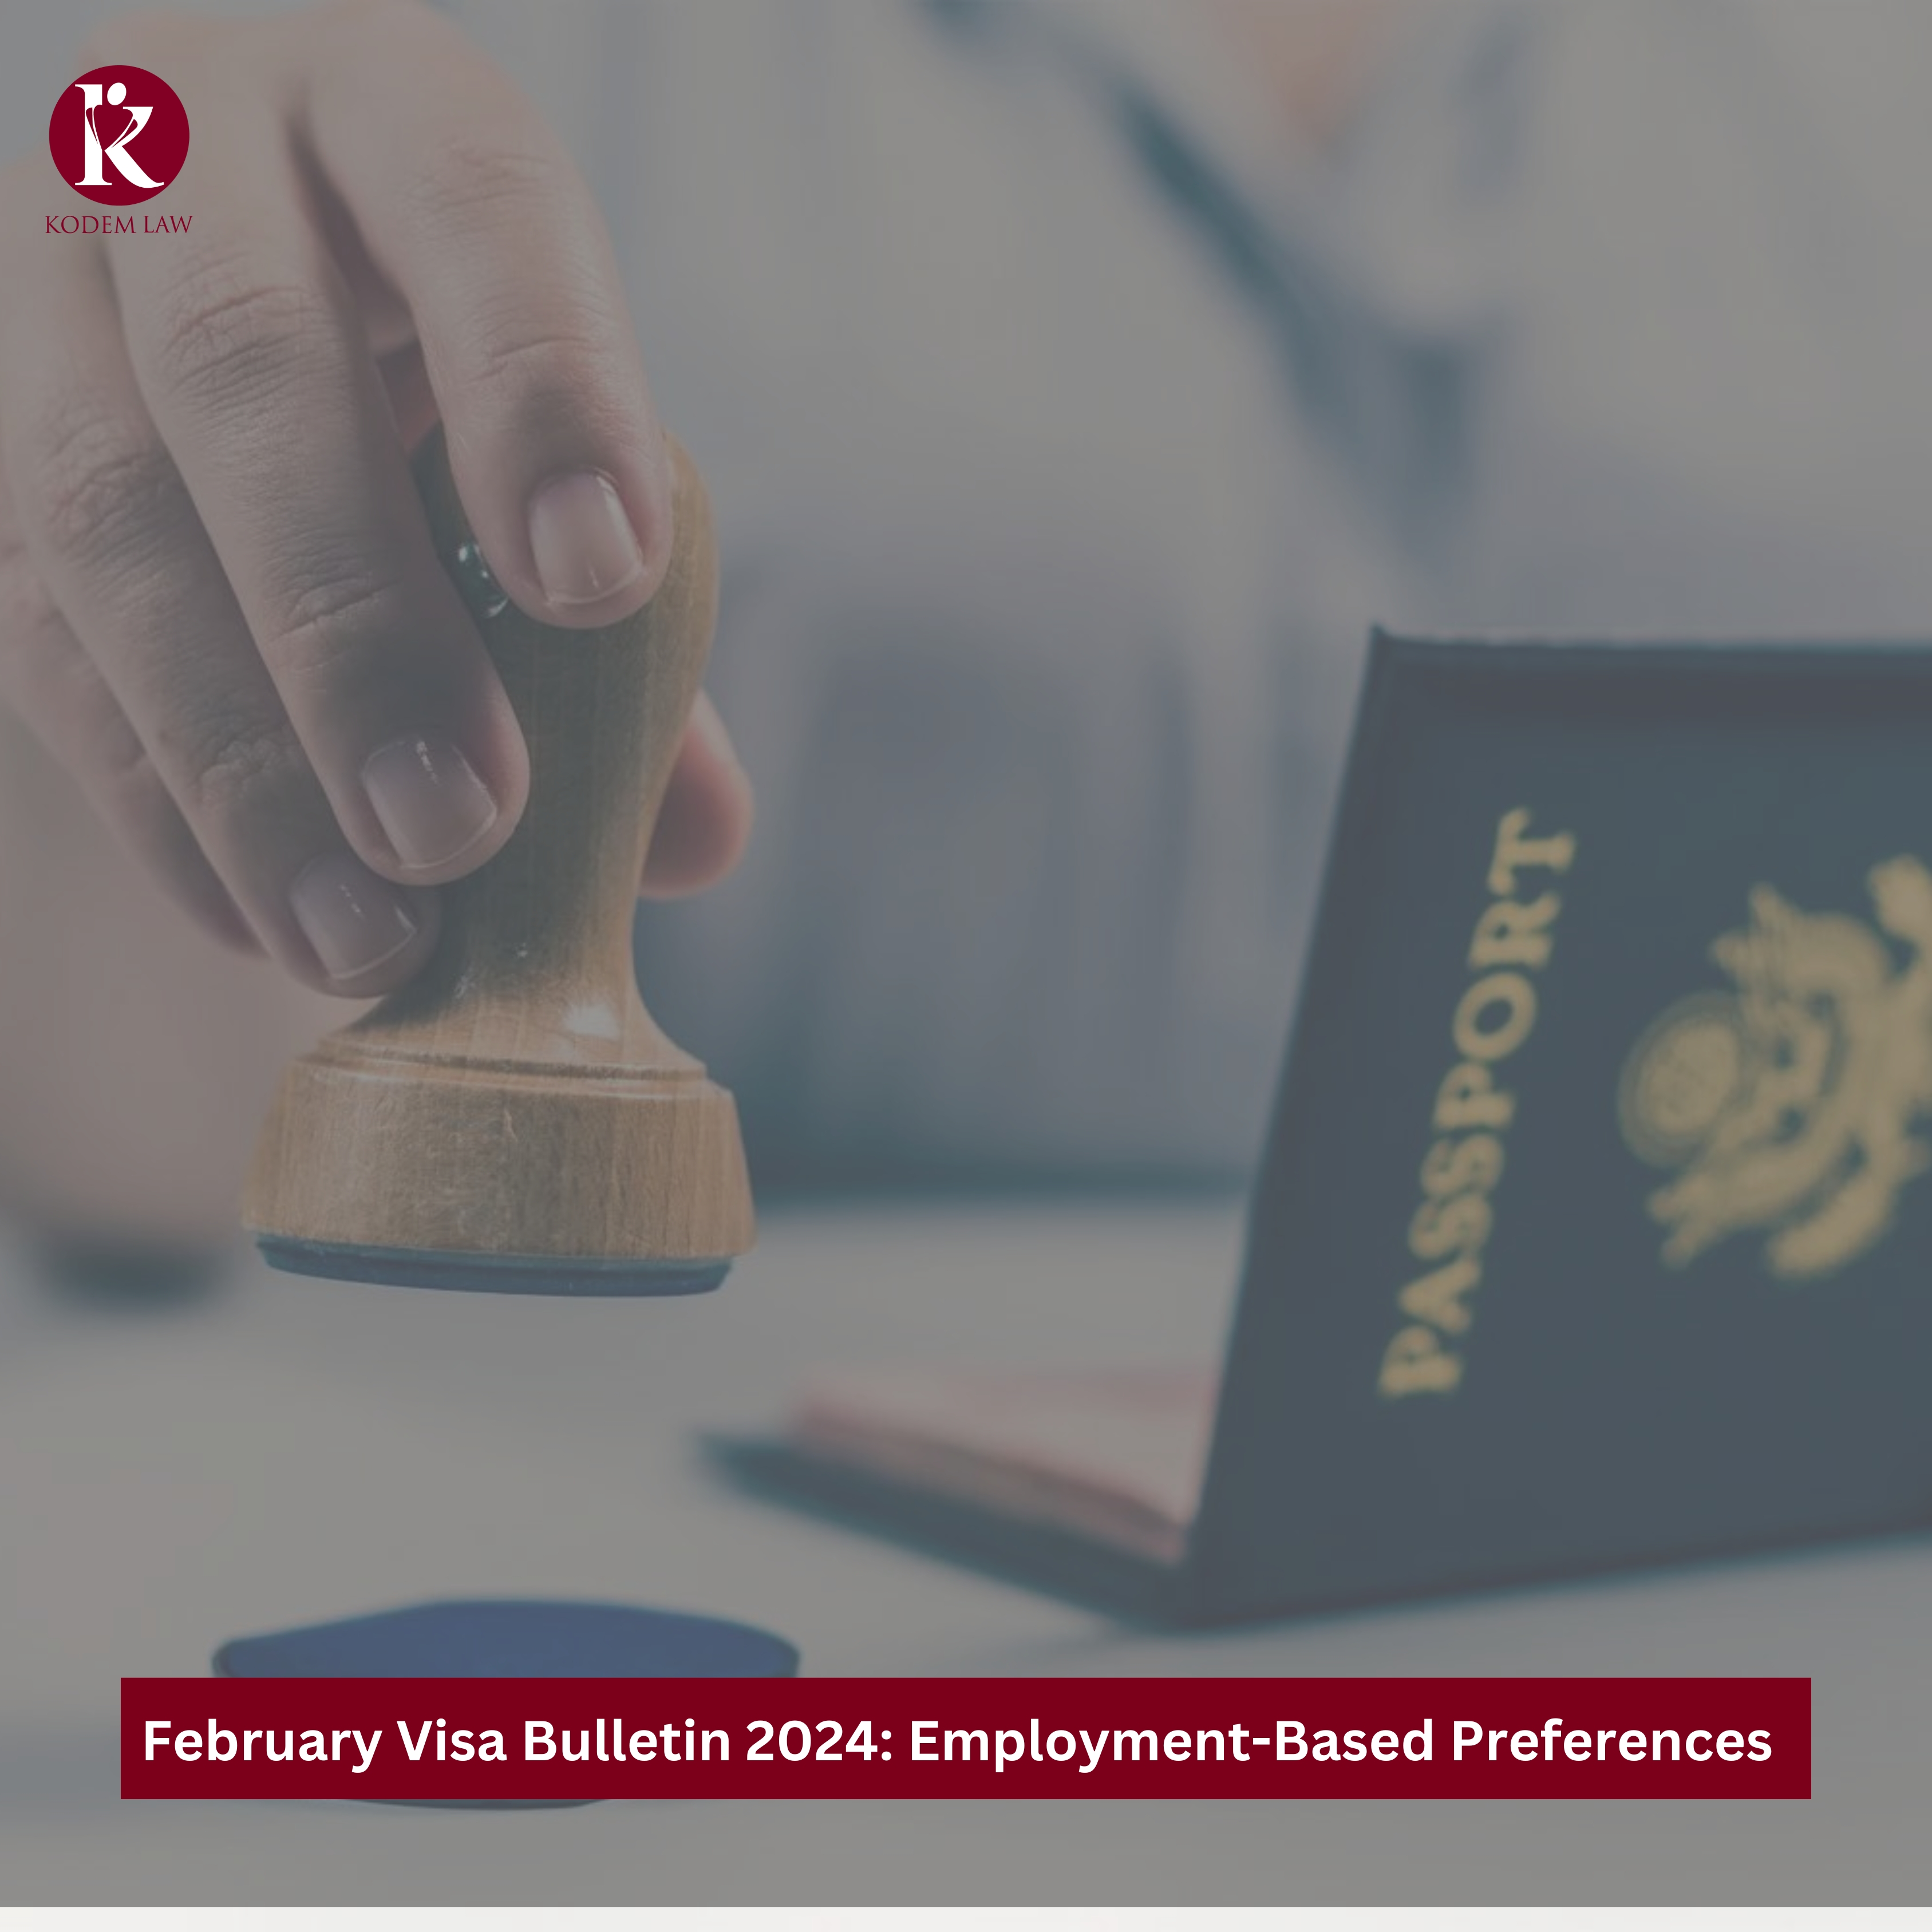 February Visa Bulletin 2024 Employment-Based Preferences